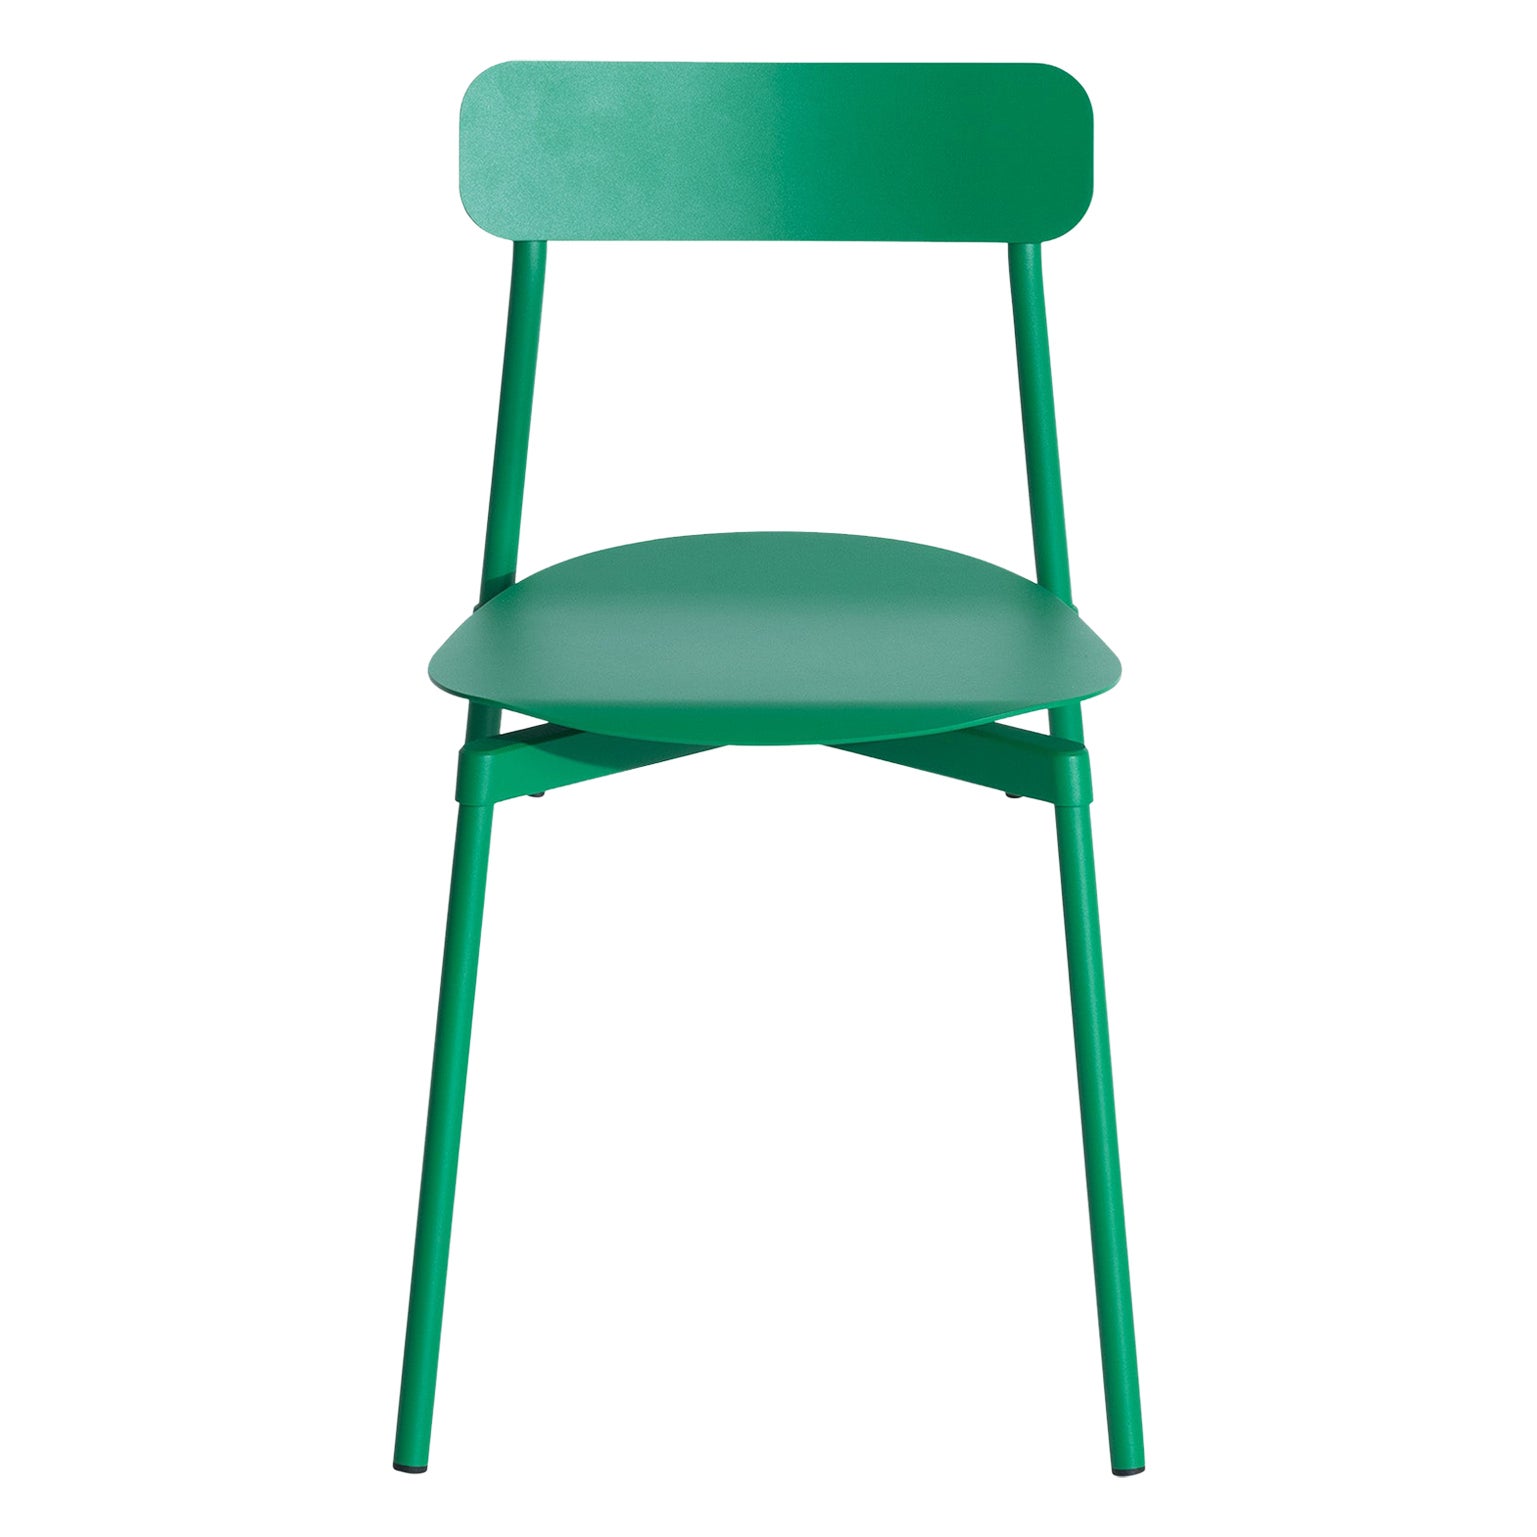 Petite chaise Friture Fromme en aluminium vert menthe par Tom Chung, 2019